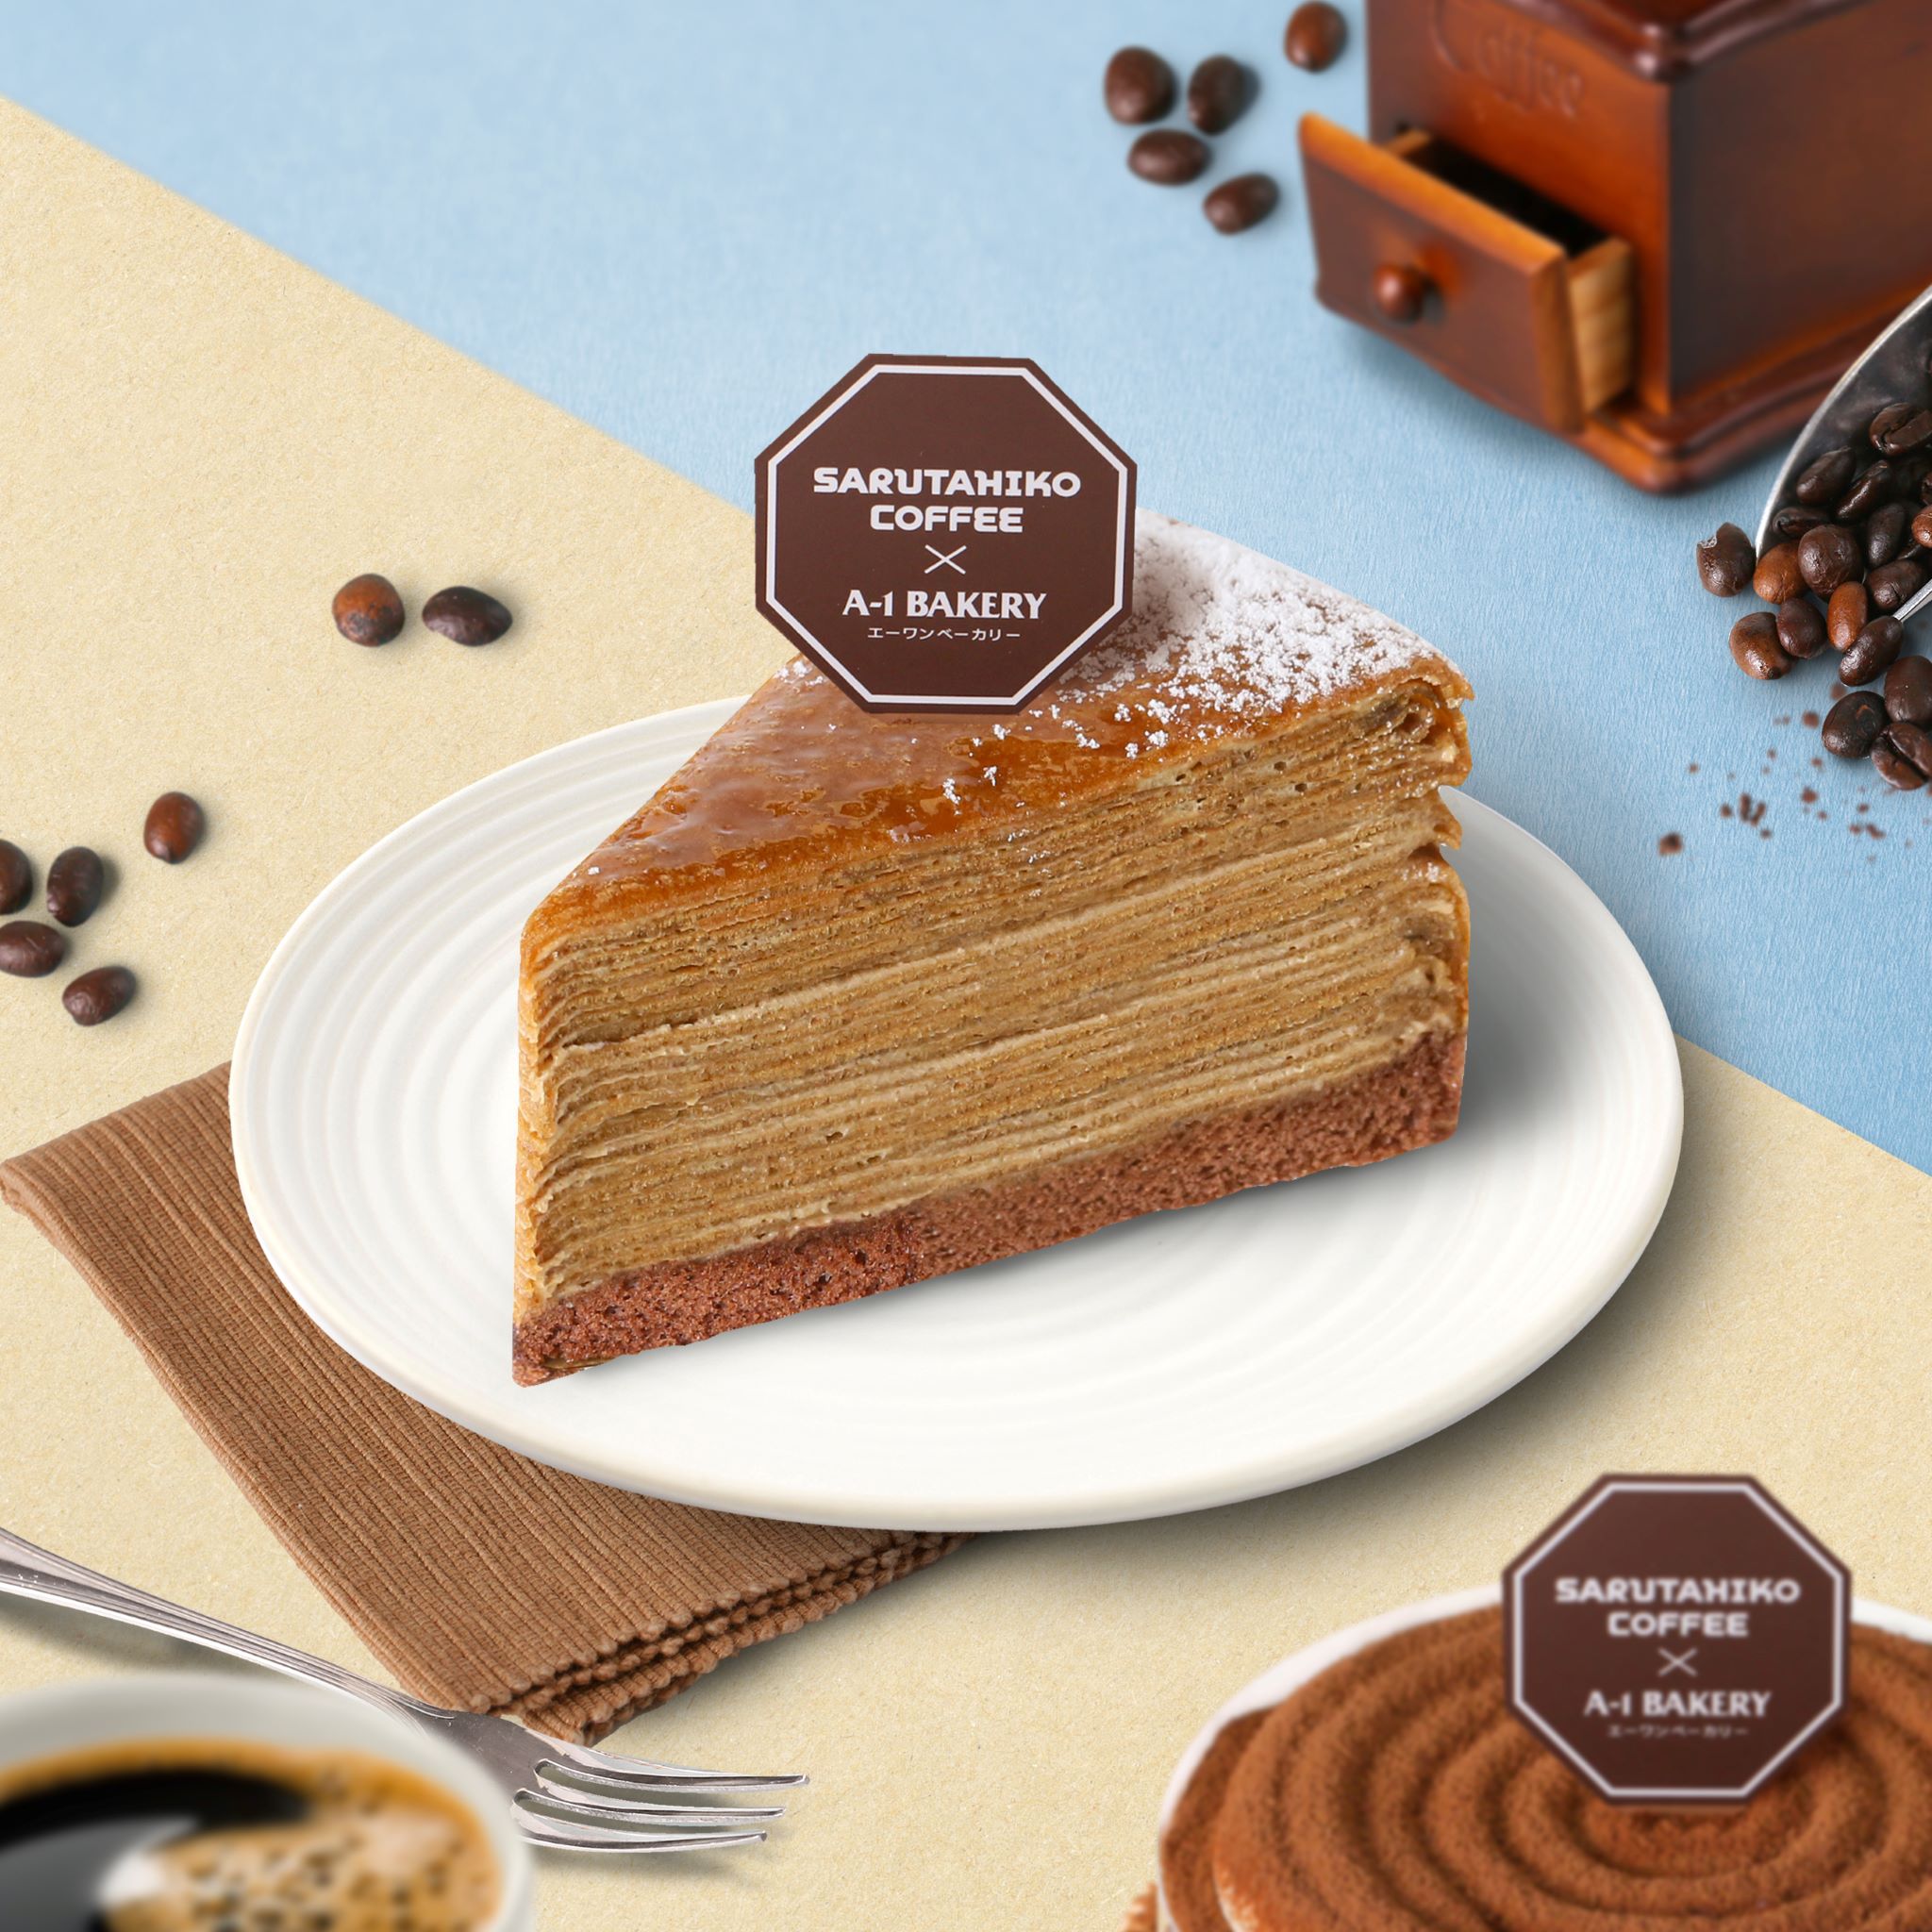 A-1 Bakery x 猿田彦珈琲 推出限定咖啡甜品及蛋糕系列